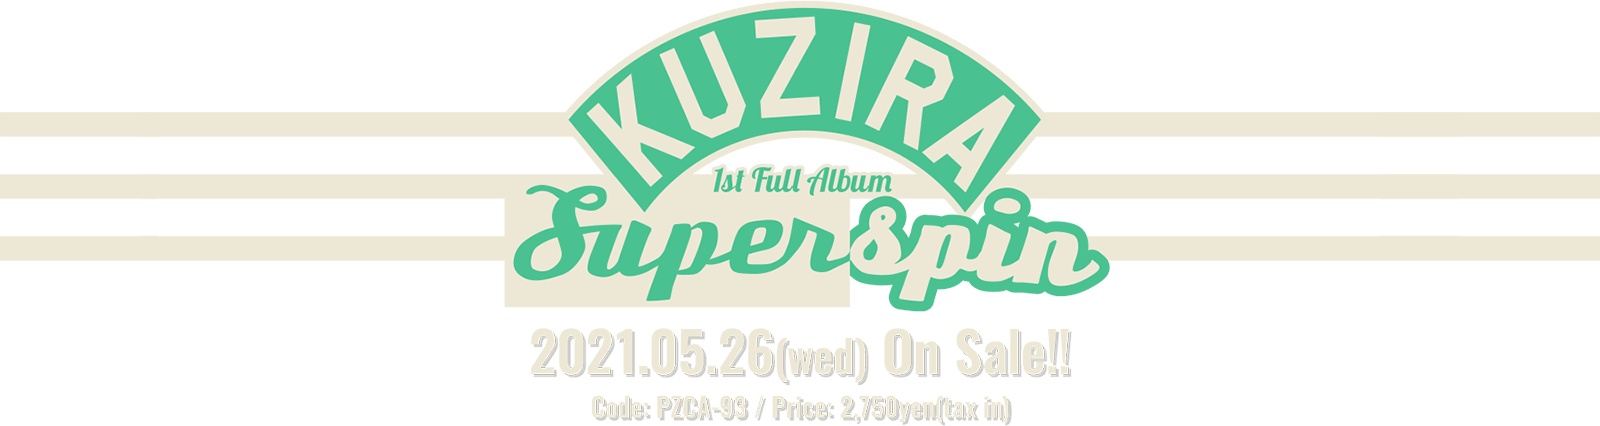 KUZIRA 1st Full Album [ Superspin ] 2021.05.26.wed In Stores!!